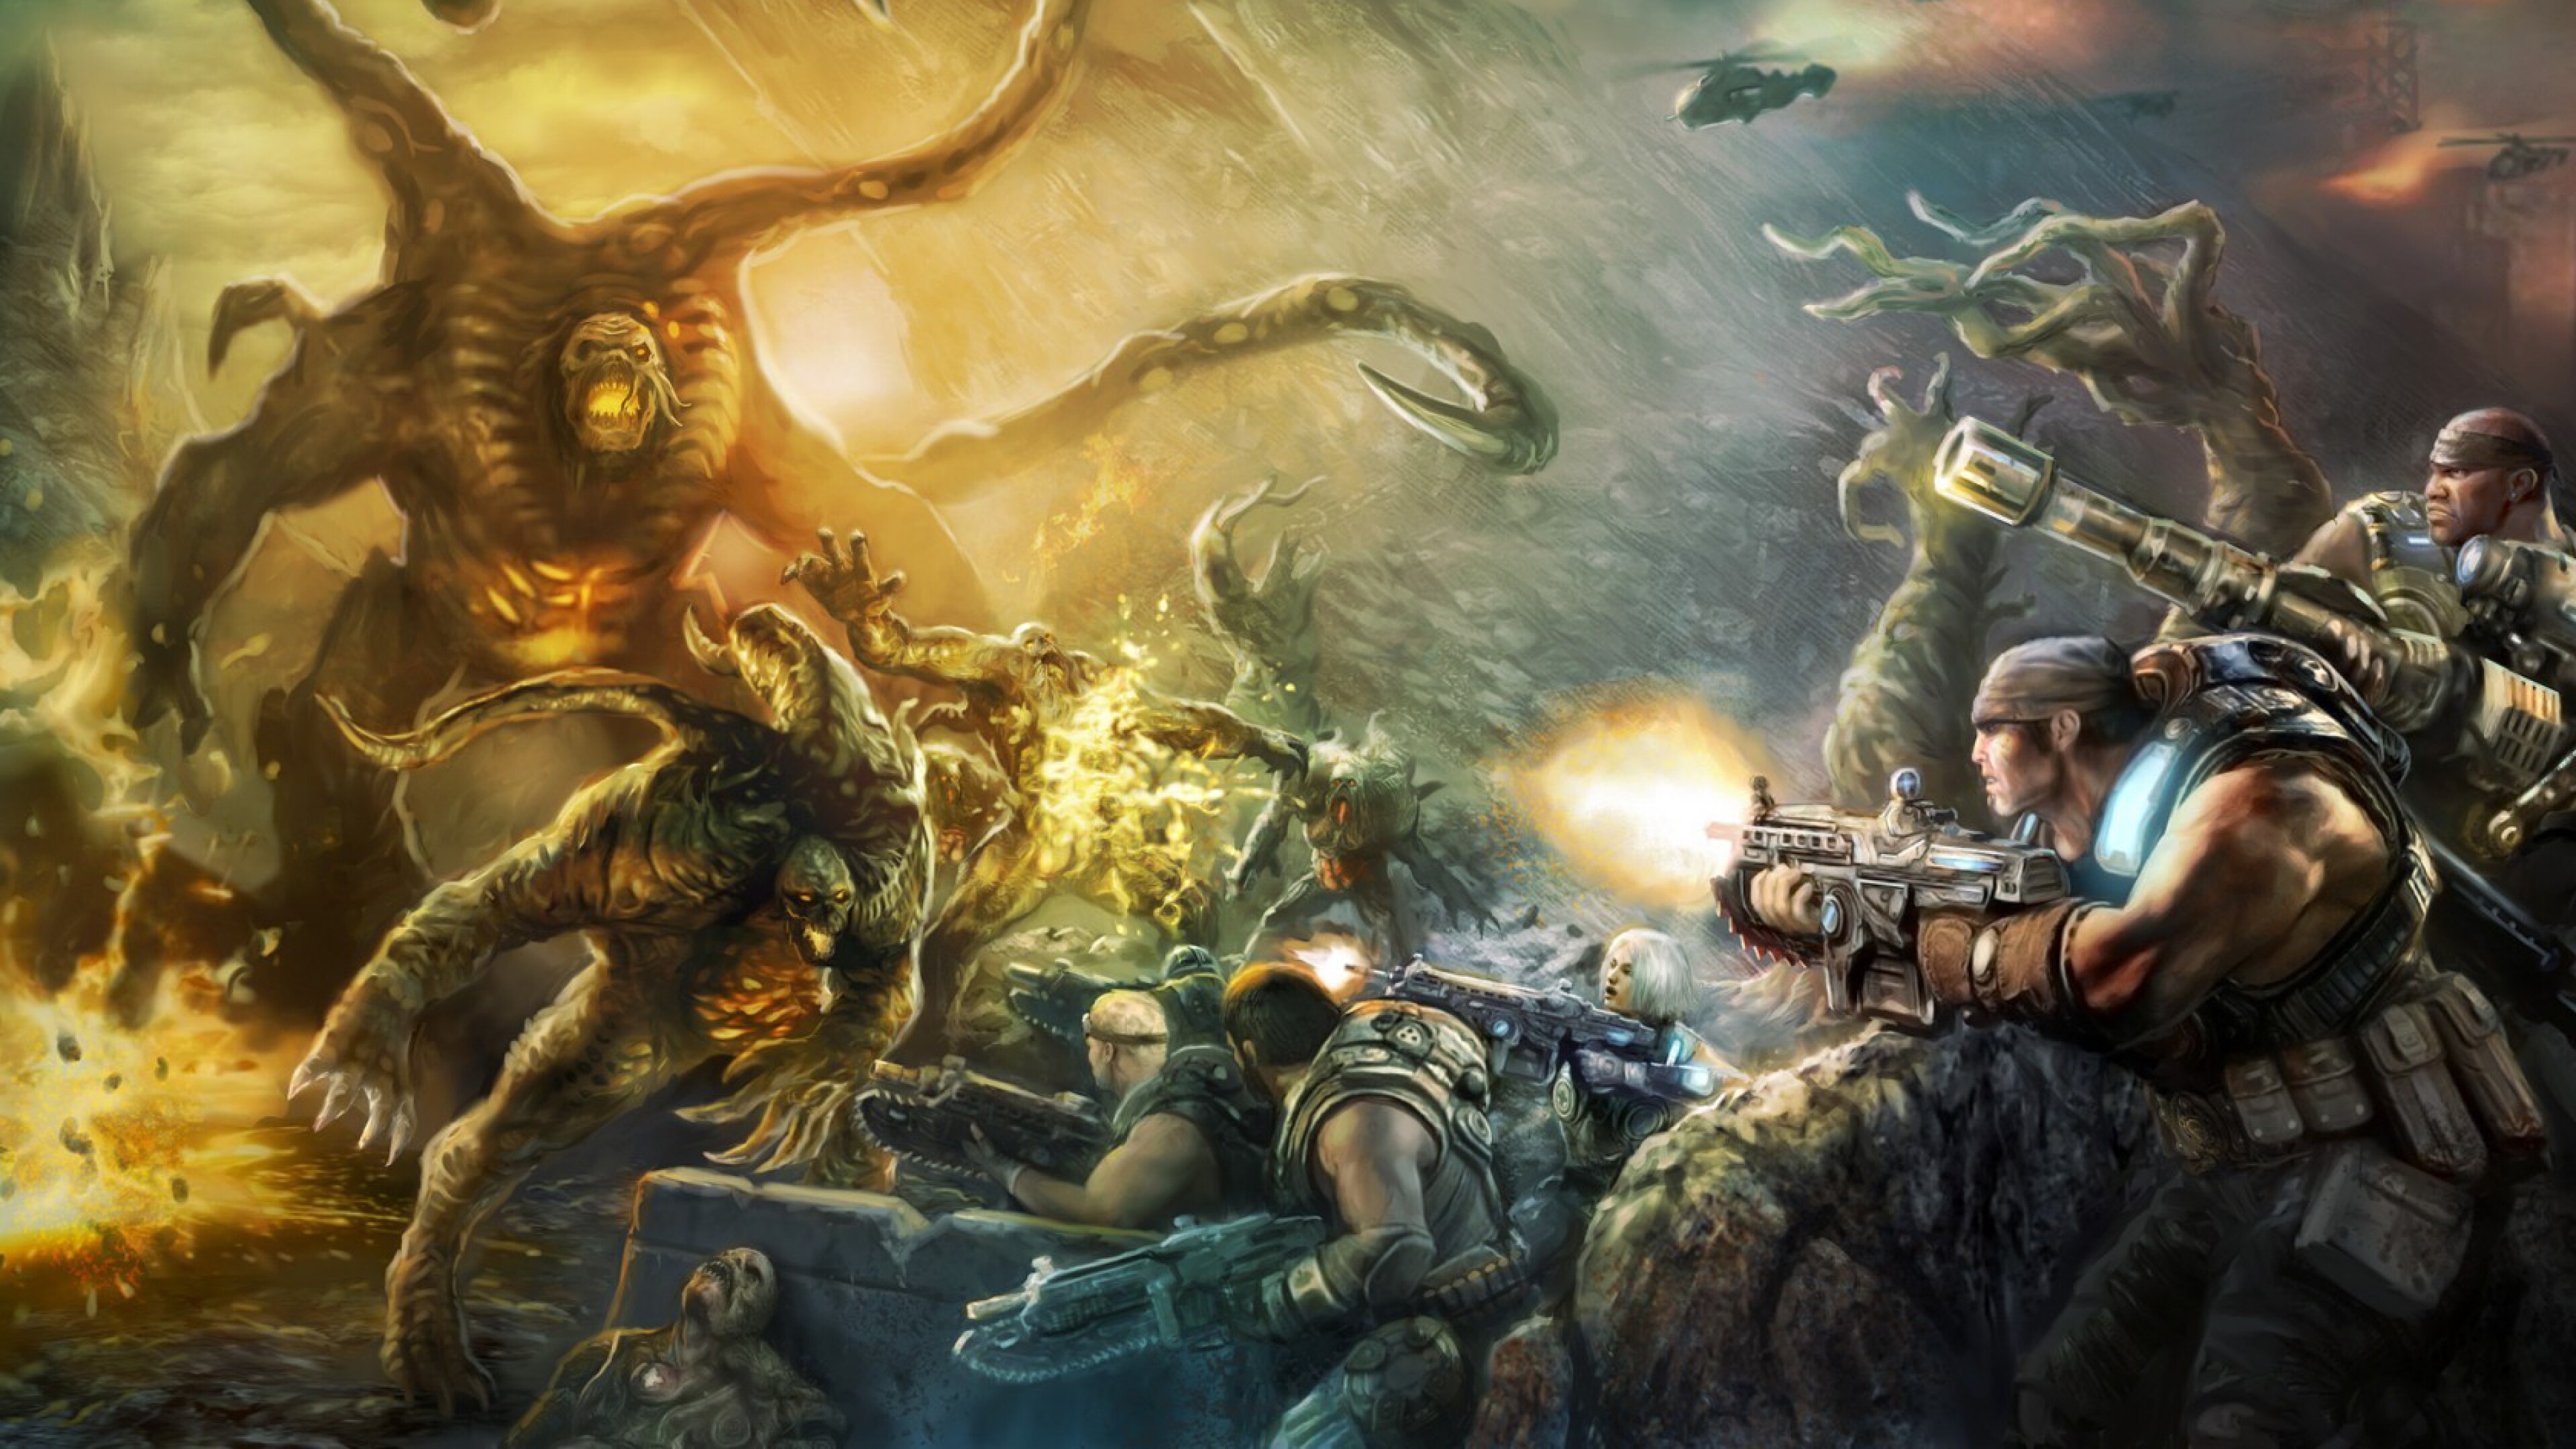 Gears of War: Marcus Fenix, Locust Horde, The world of Sera, Dominic Santiago, Epic Games video game. 3840x2160 4K Wallpaper.